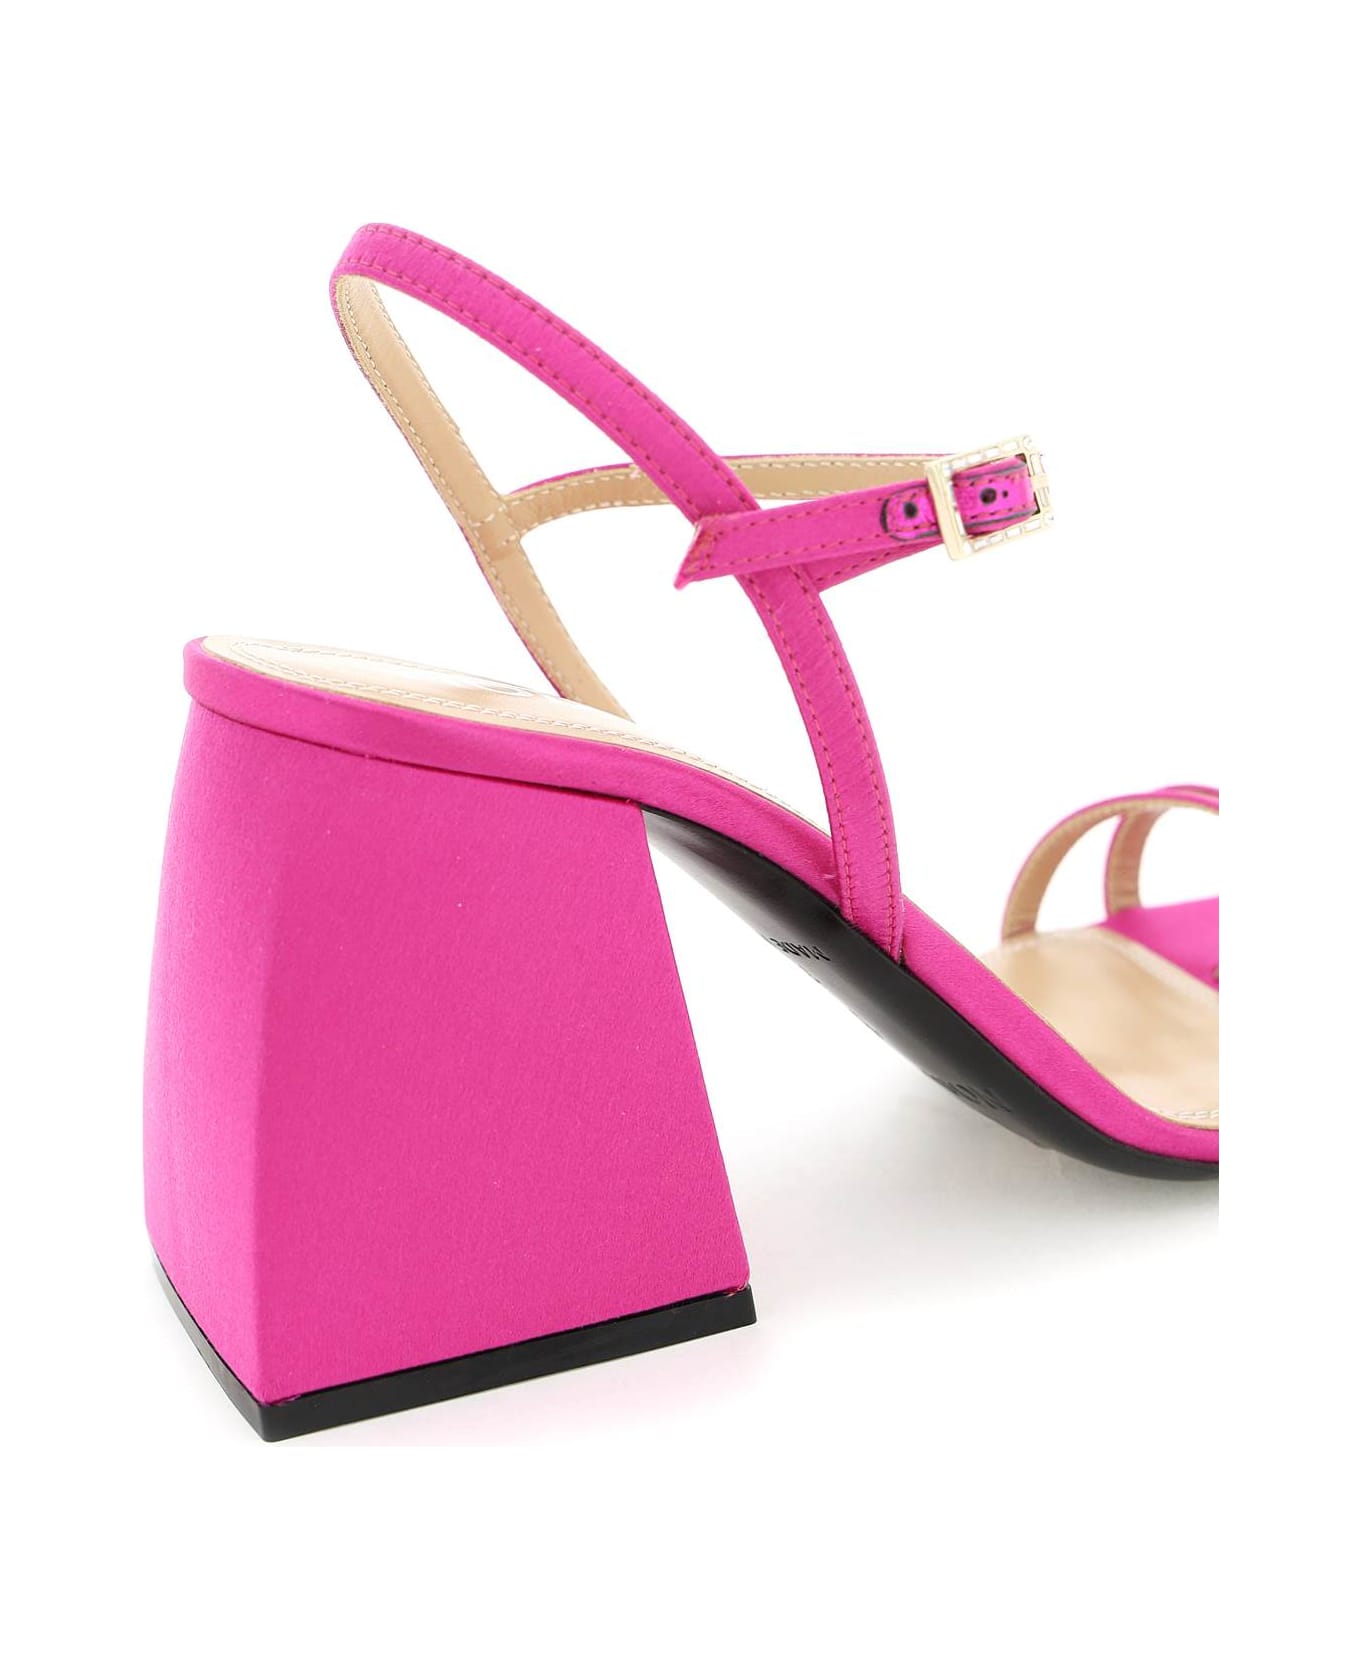 Nodaleto 'bulla Sally' Sandals - SHOCKING PINK (Pink) サンダル